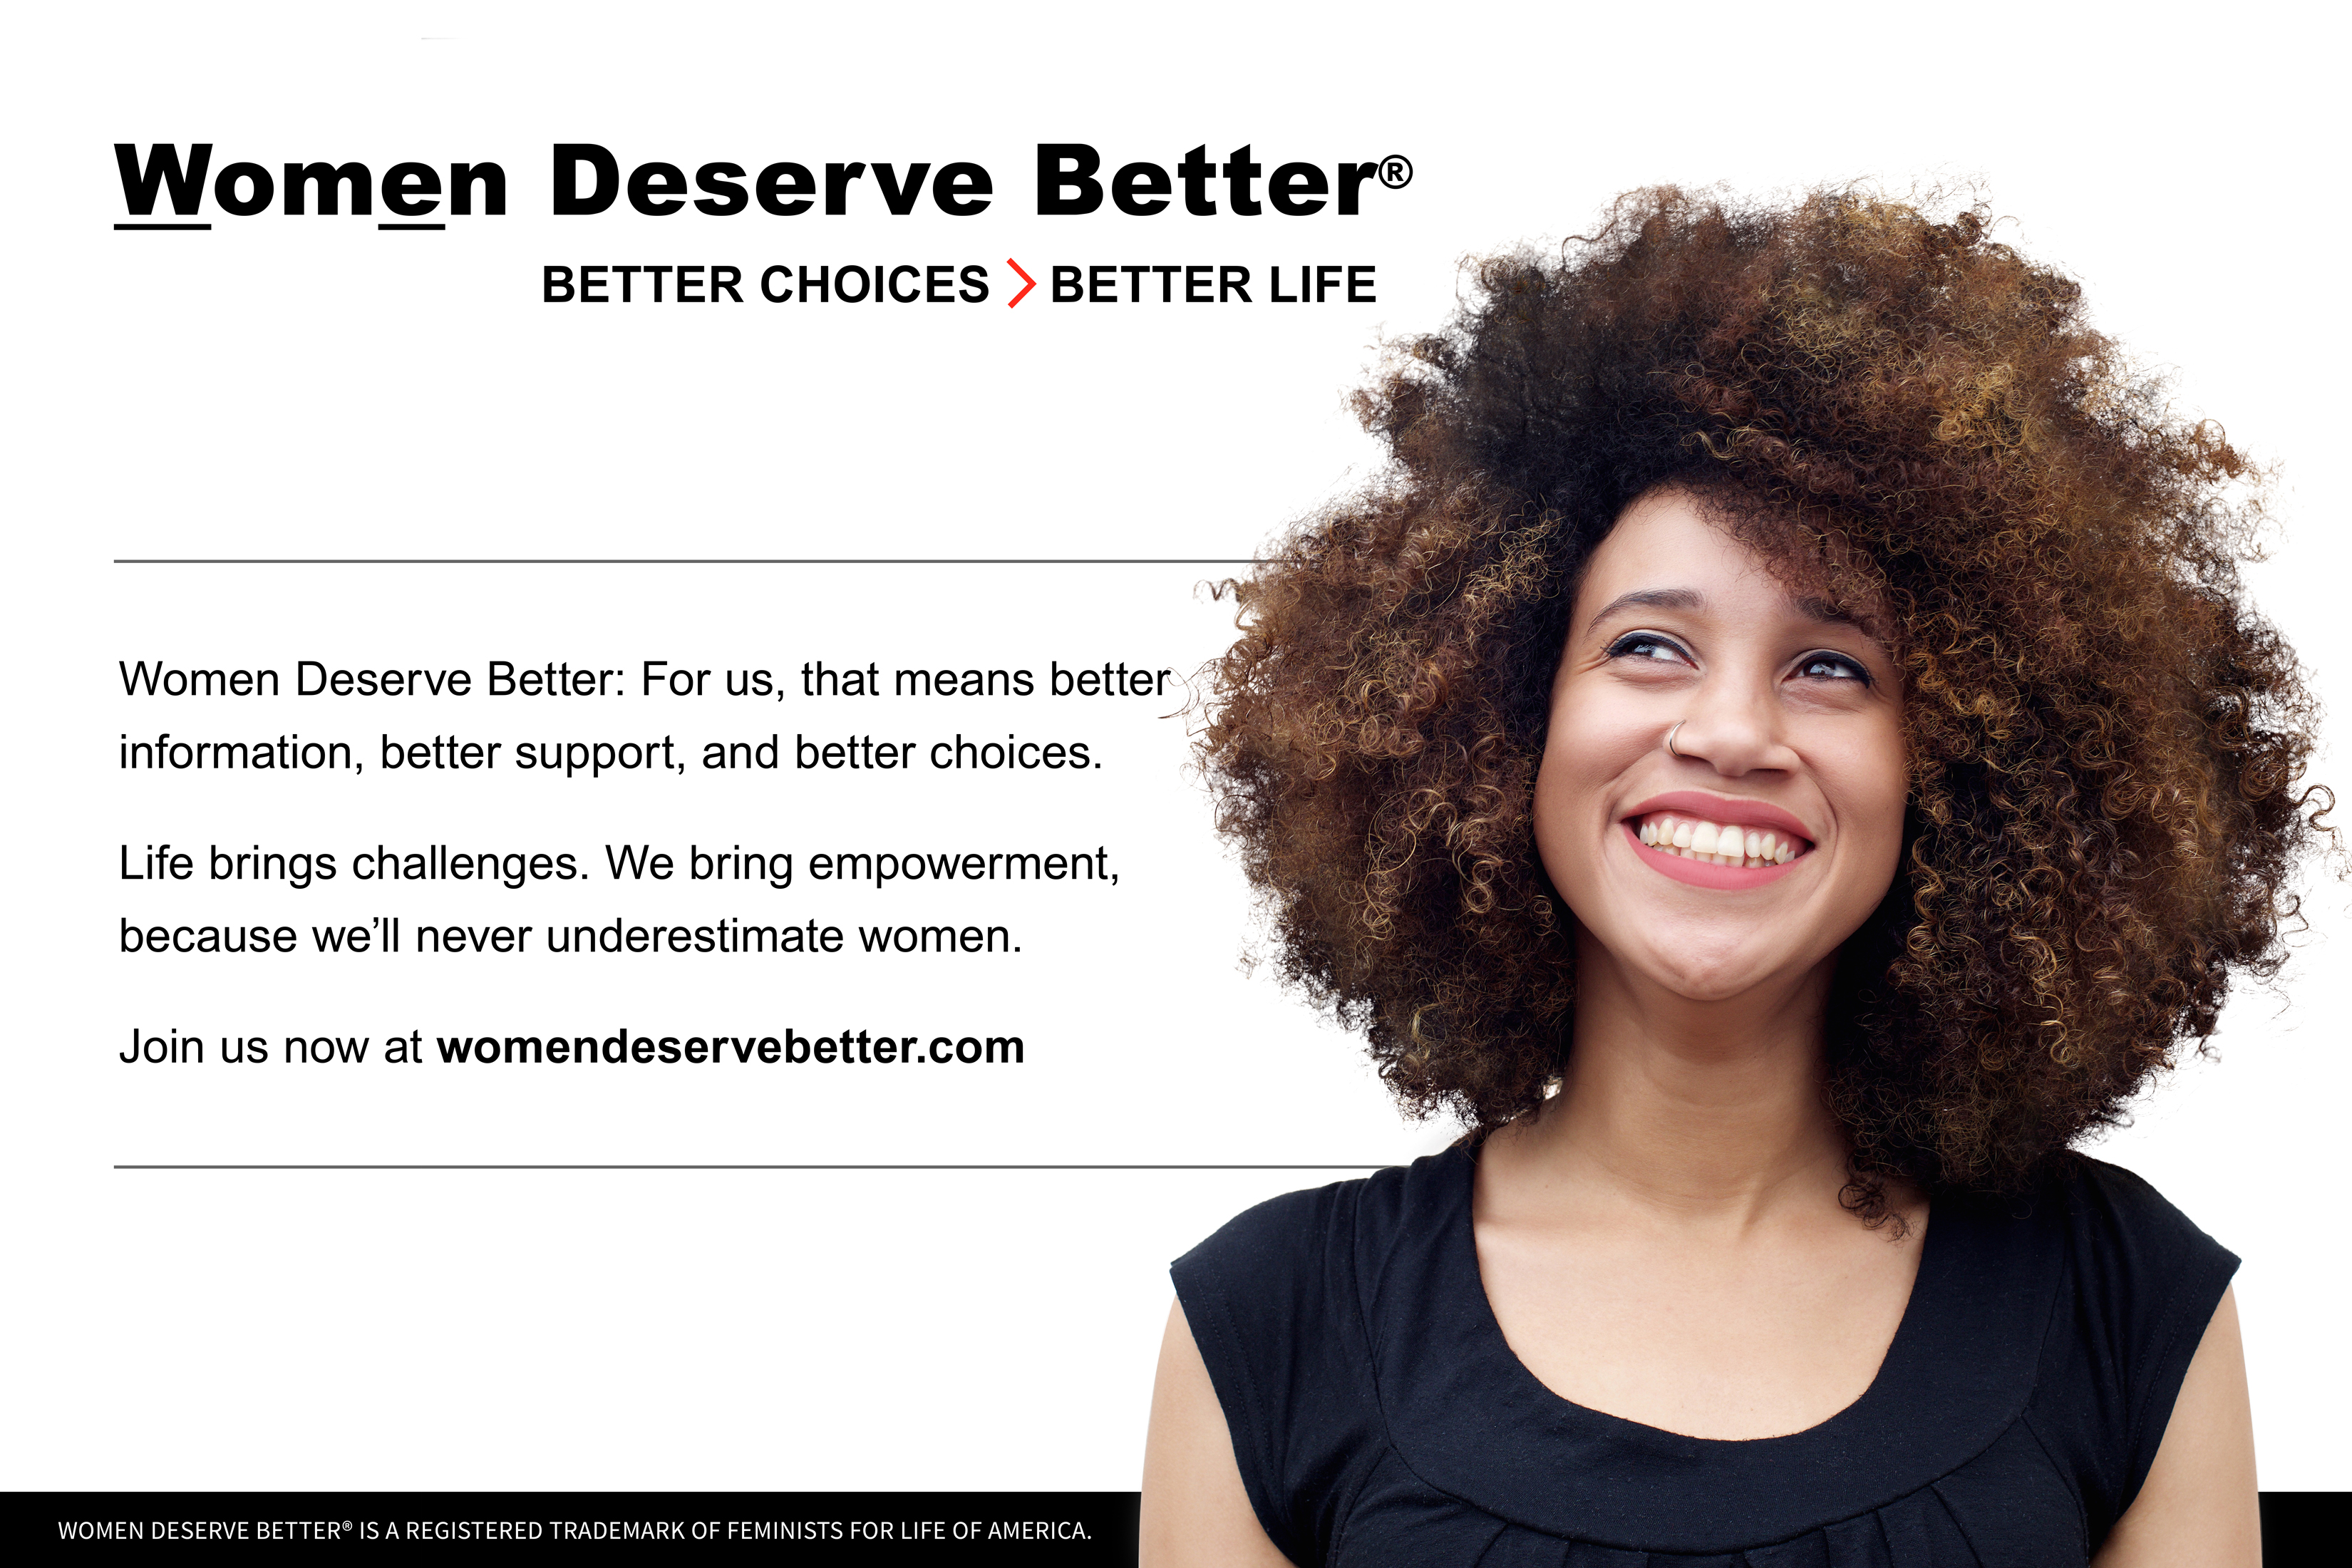 White woman перевод. Women support women. Проект жизнь женщины. Better choice. Promote woman.